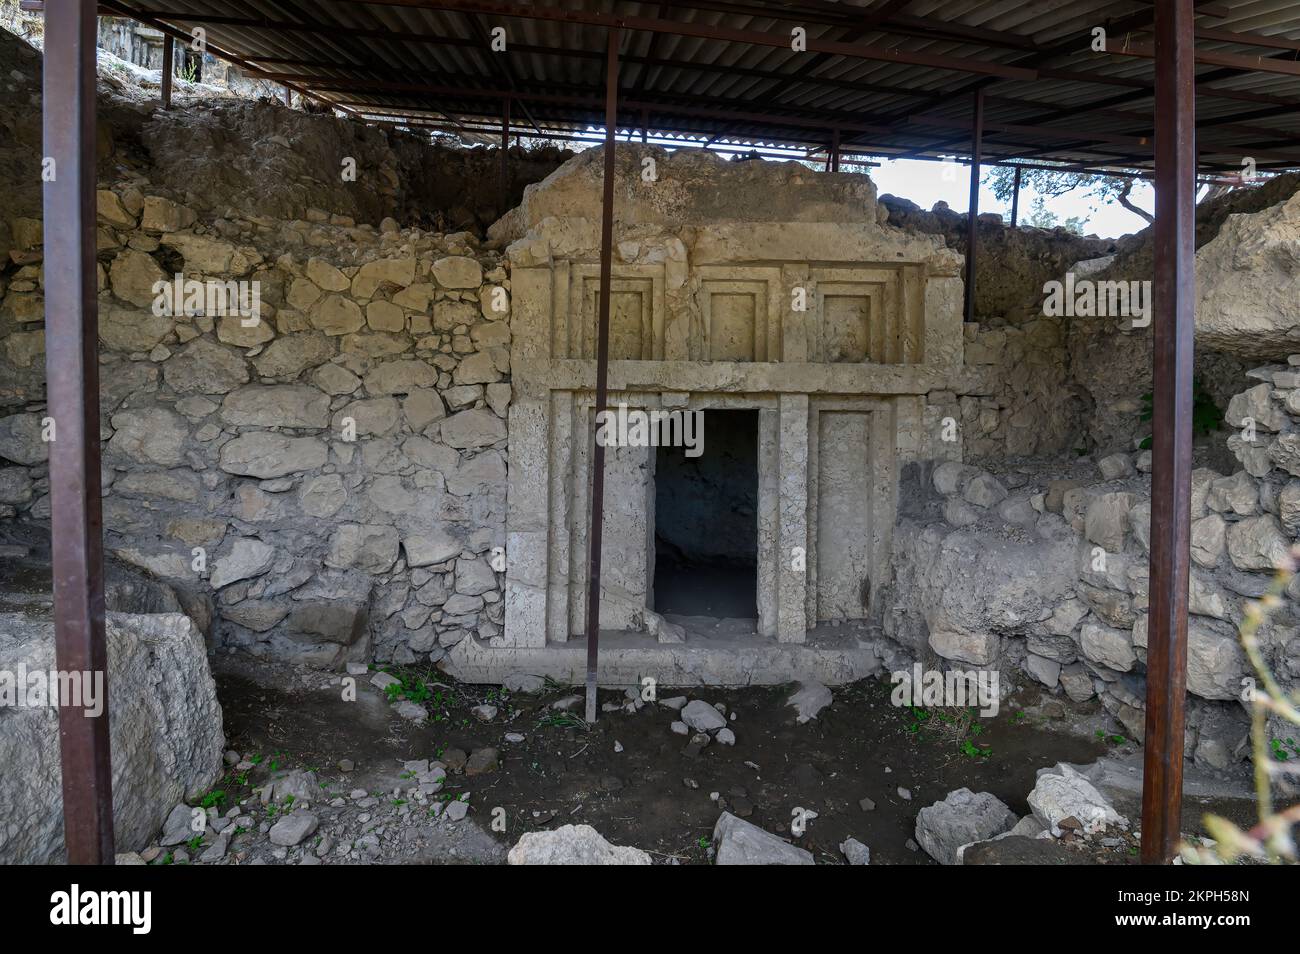 Tlos ruins and tombs, an ancient Lycian city near the town of Seydikemer, Mugla, Turkey. Stock Photo